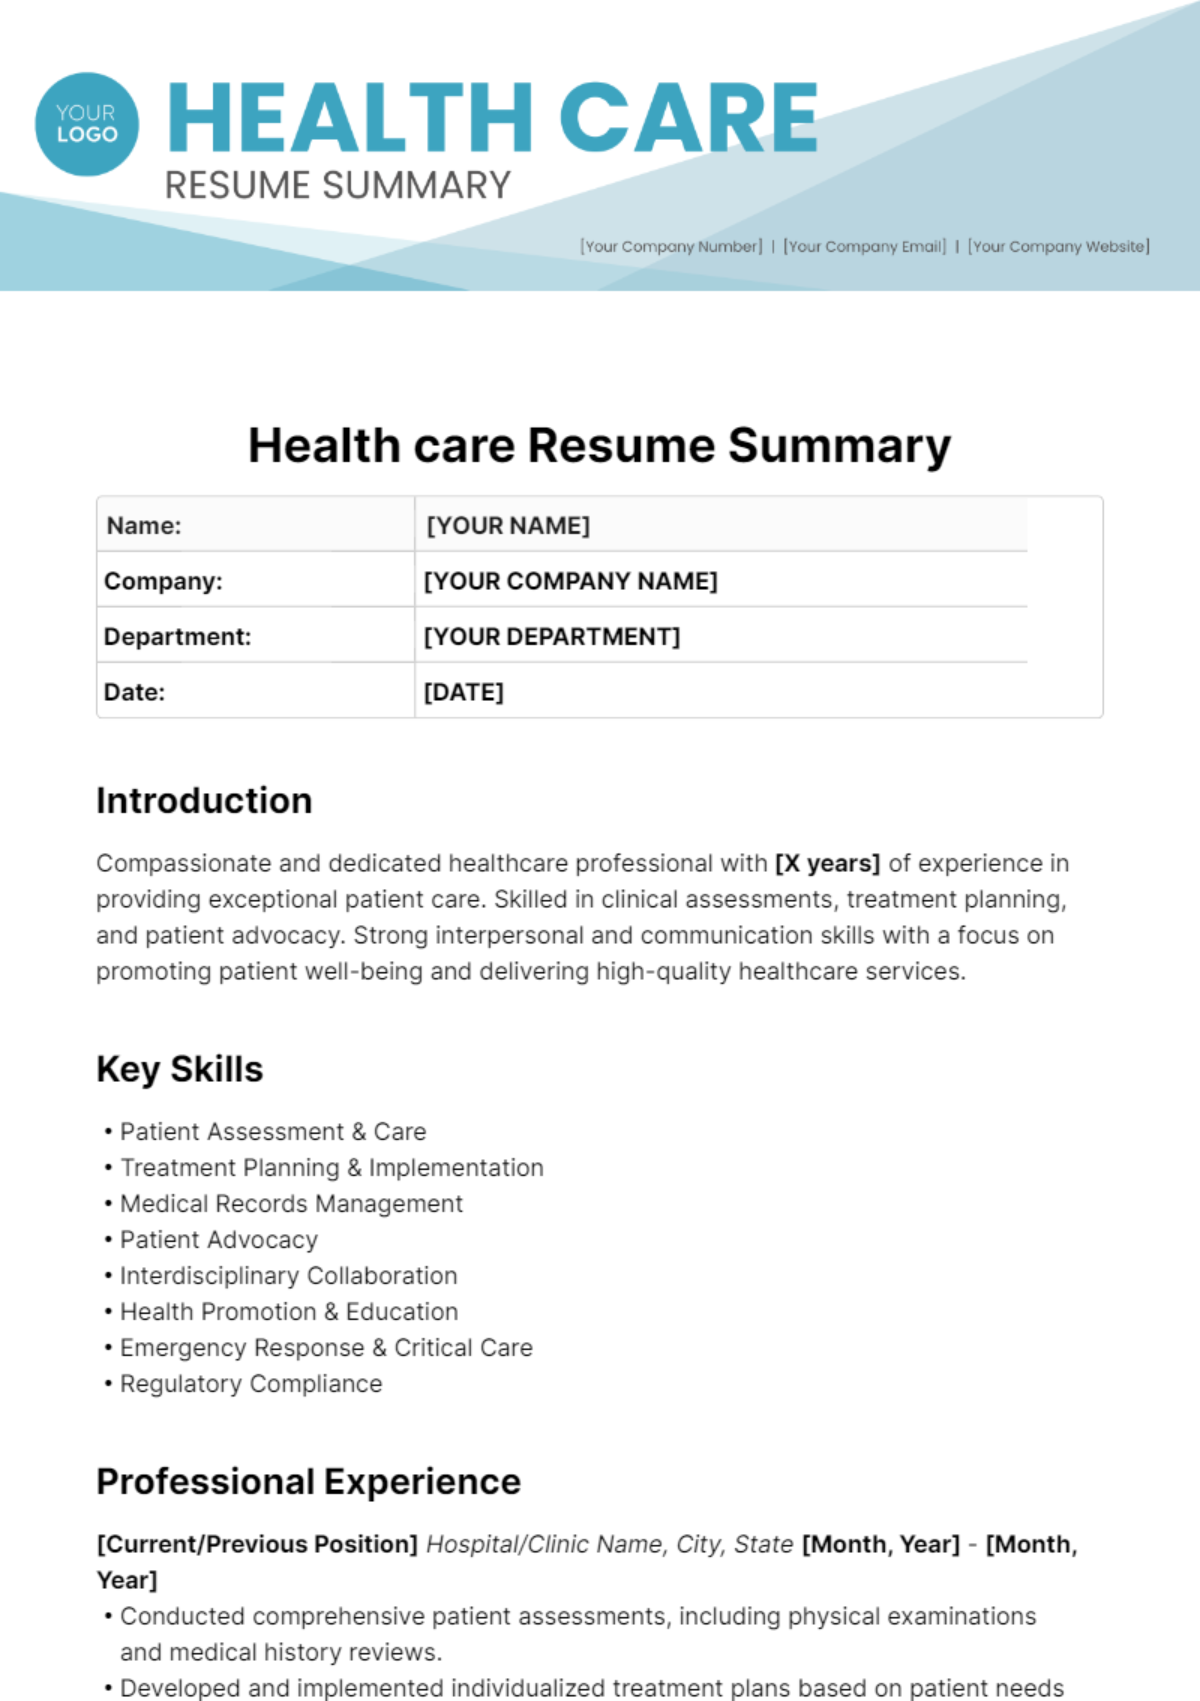 Health Care Resume Summary Template